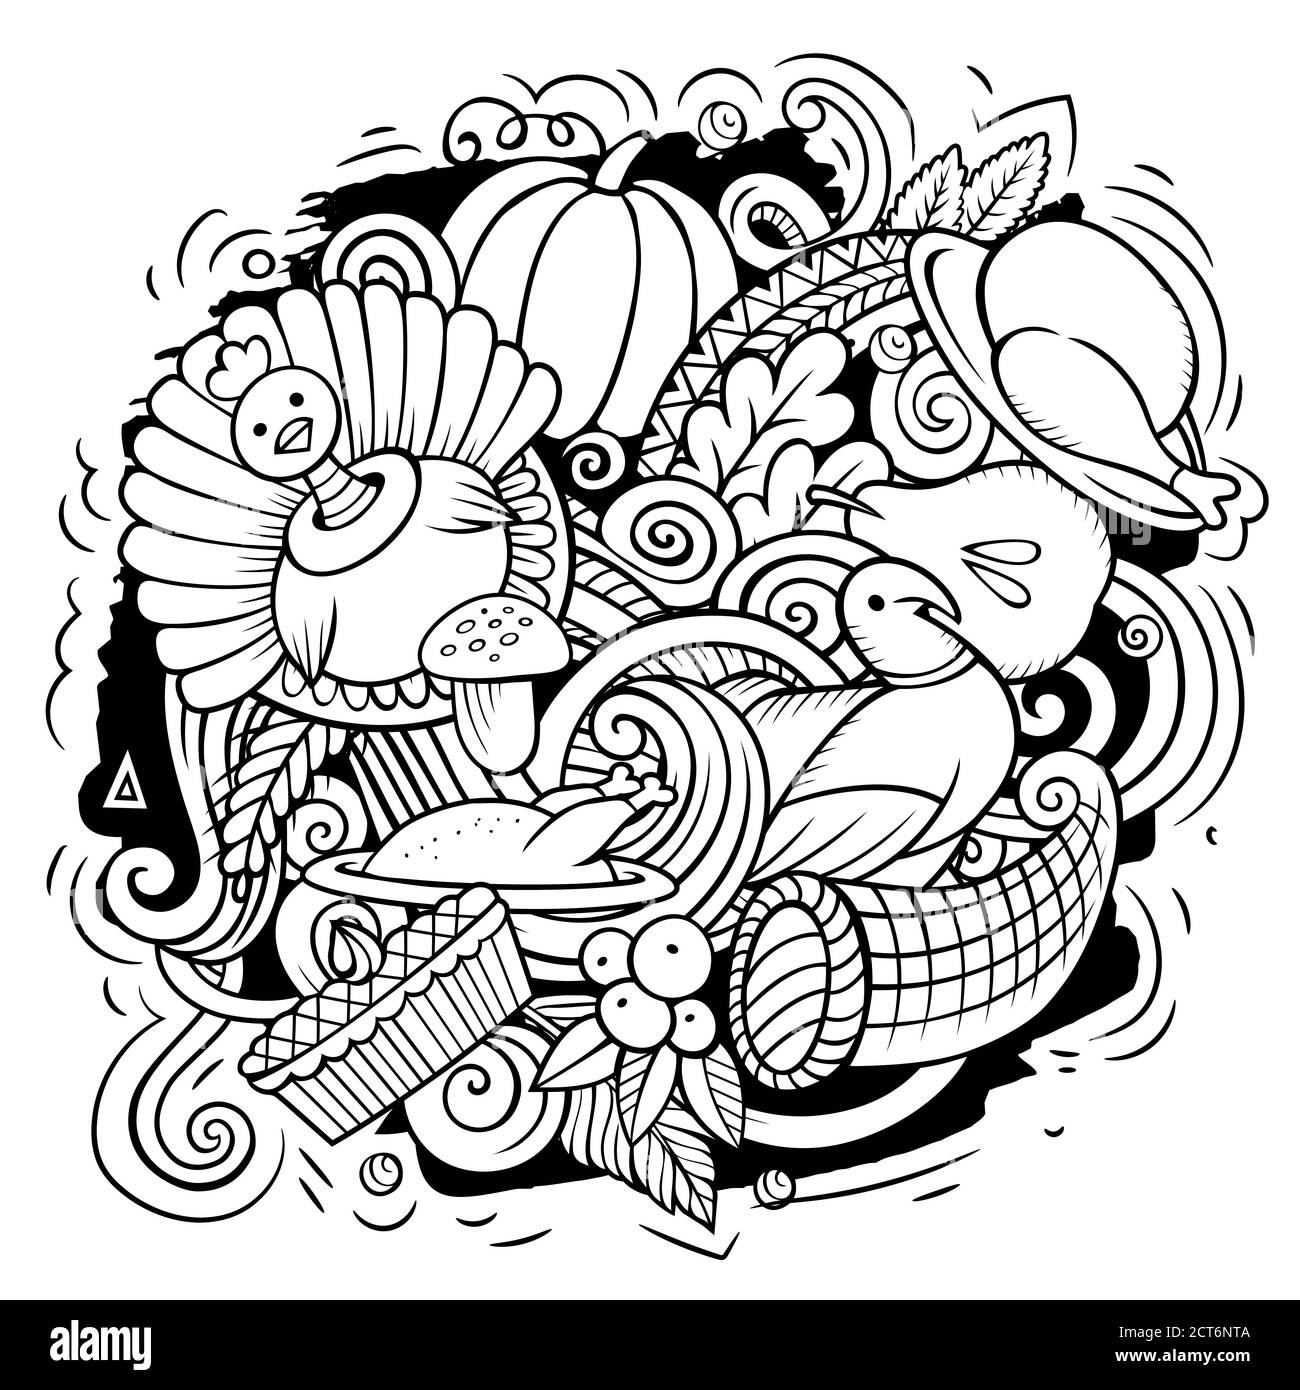 Thanksgiving hand drawn cartoon doodles illustration Stock Vector Image ...